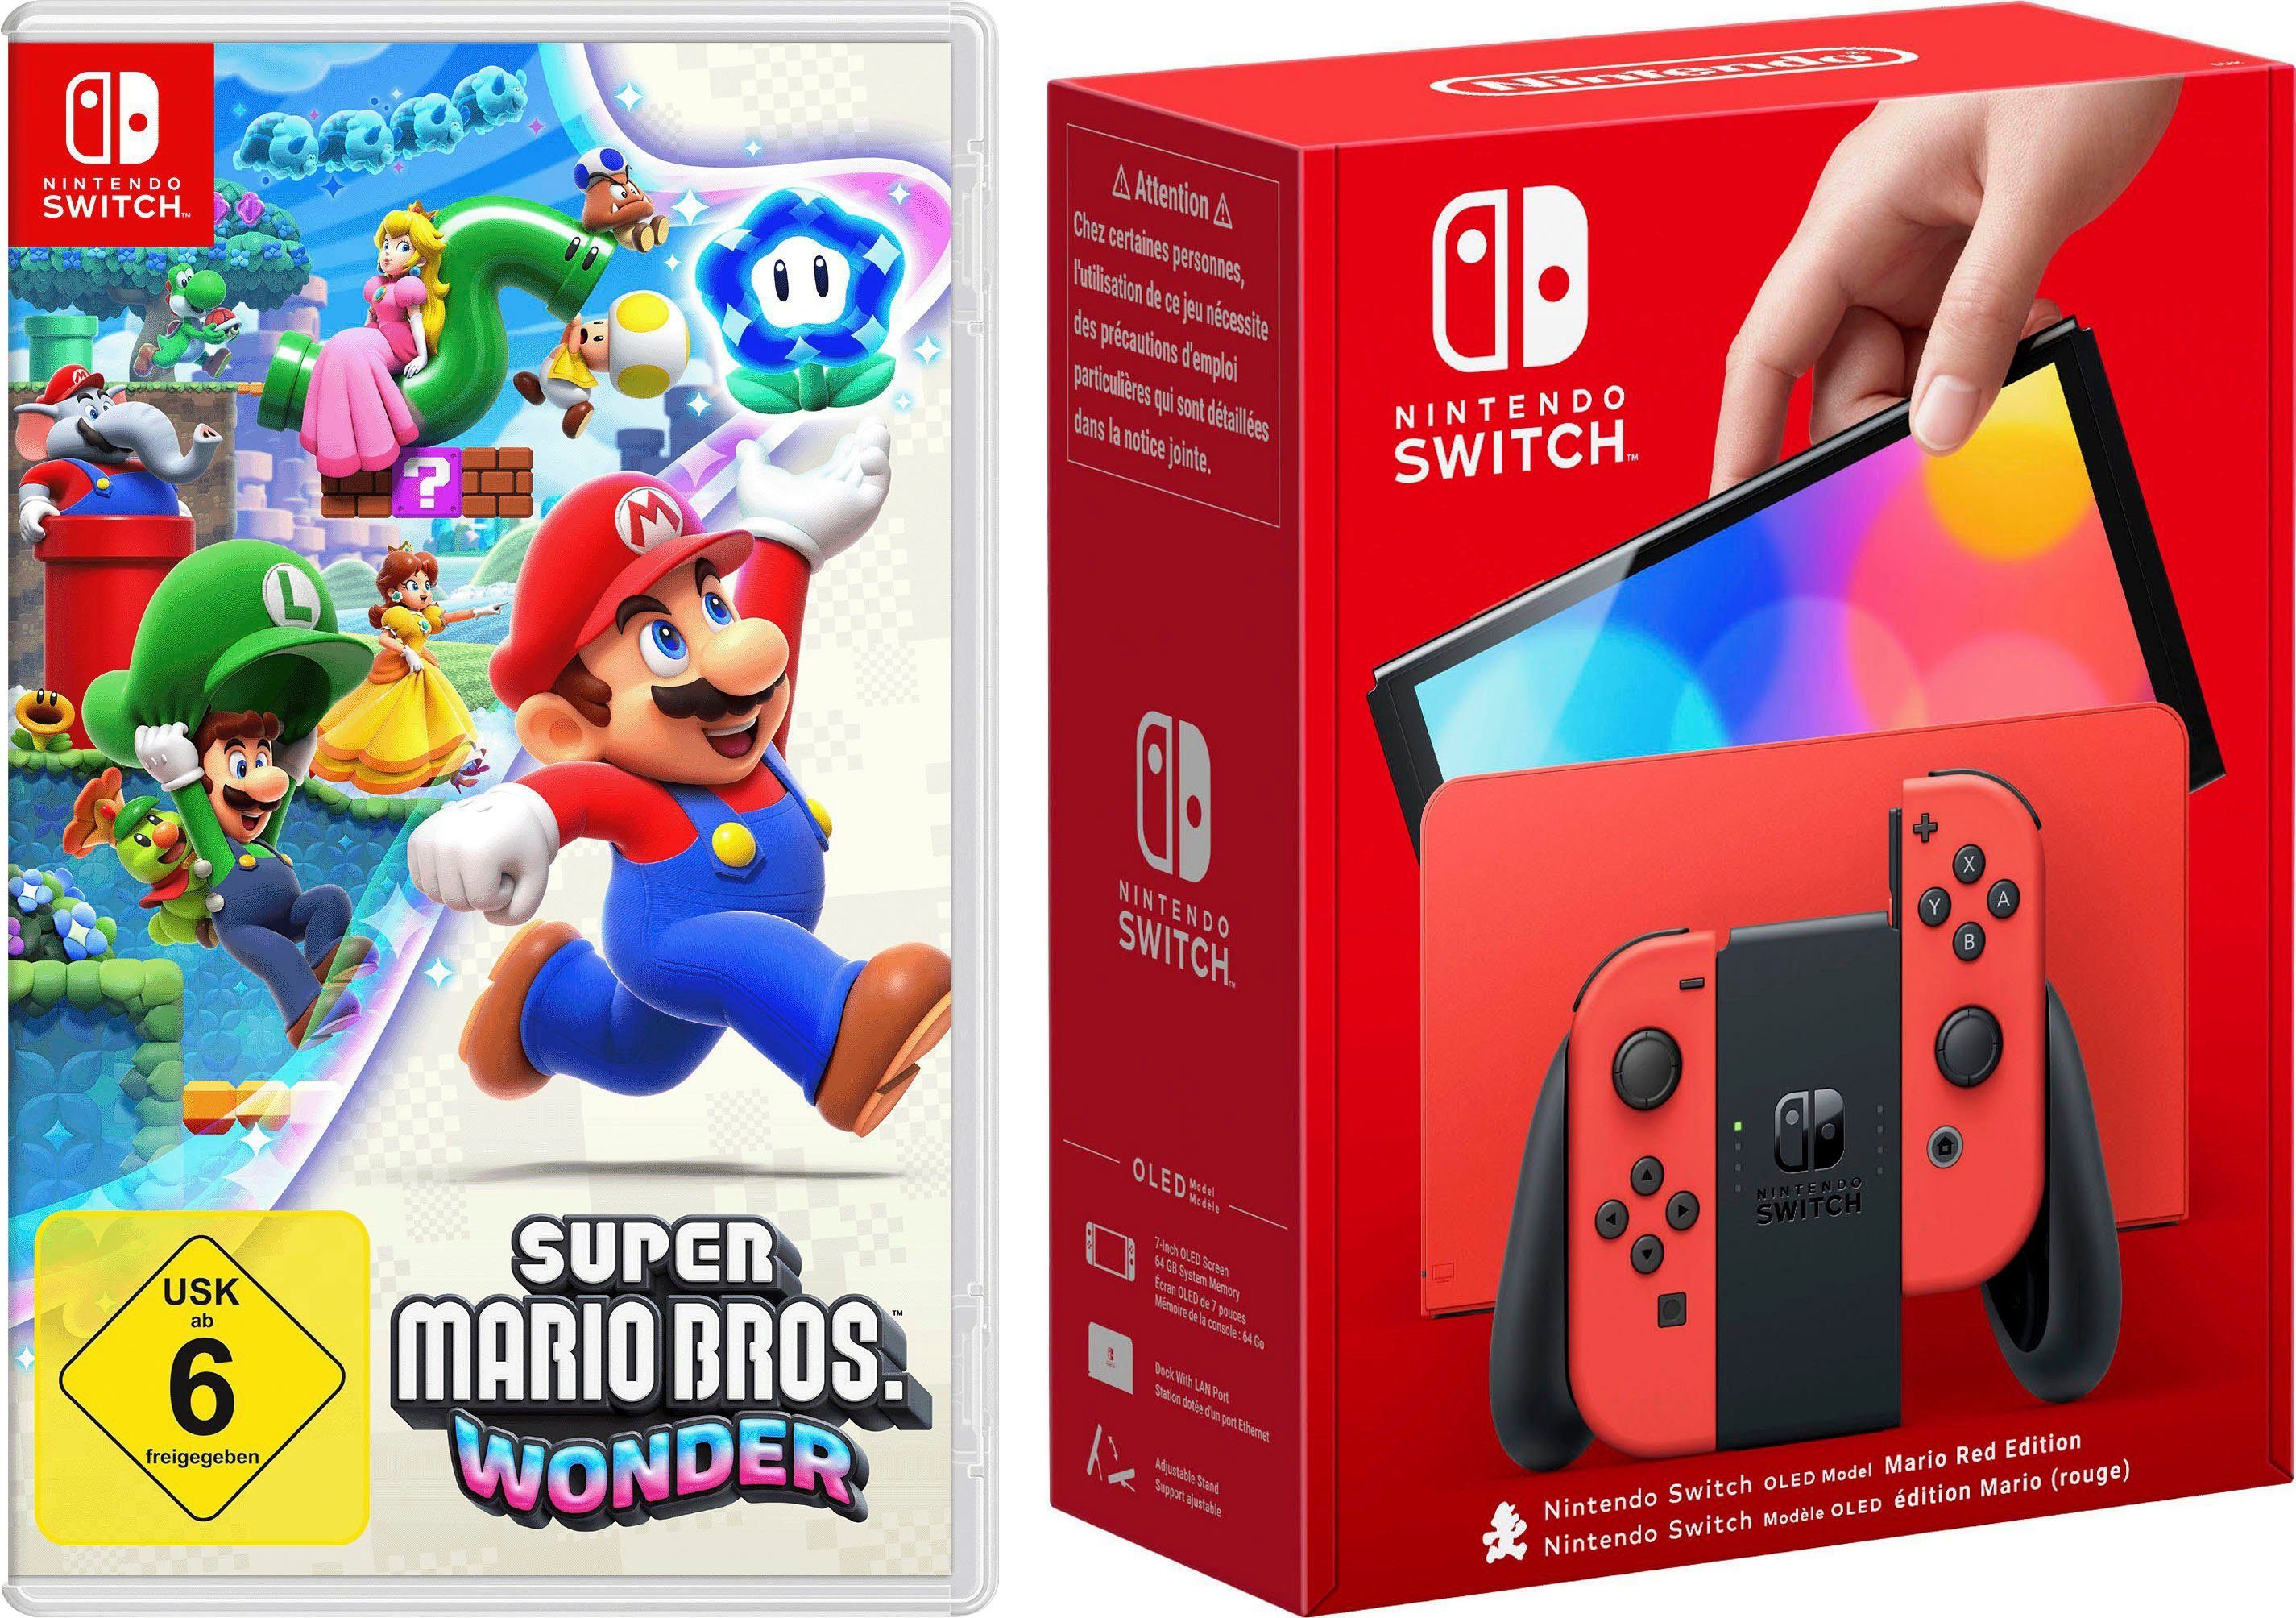 Nintendo Switch OLED Mario Edition + Super Mario Bros. Wonder